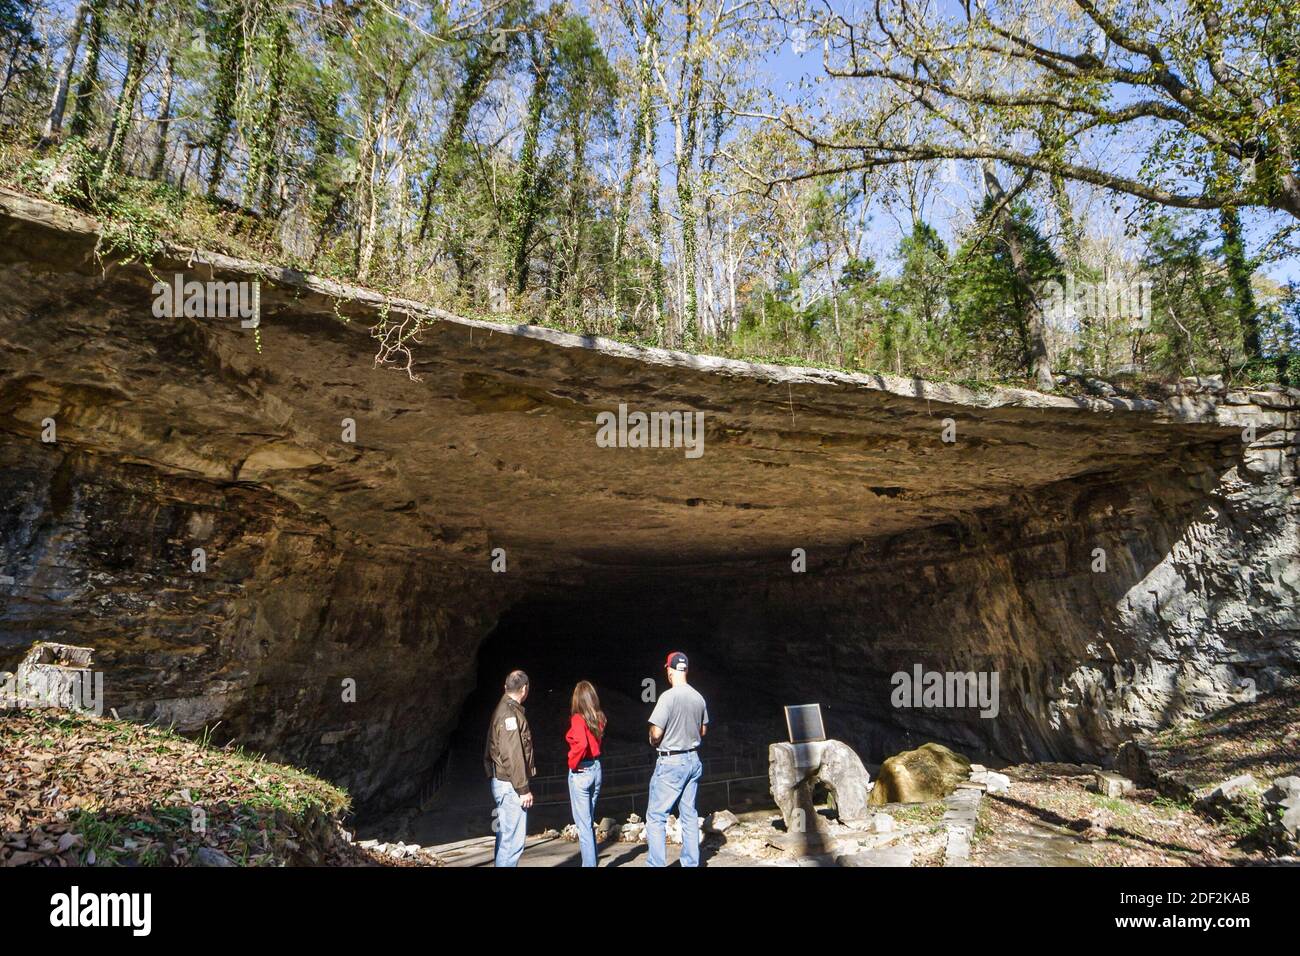 Alabama Grant Cathedral Caverns state Park, ingresso grotta, guida ranger che visita uomo donna coppia femminile, Foto Stock